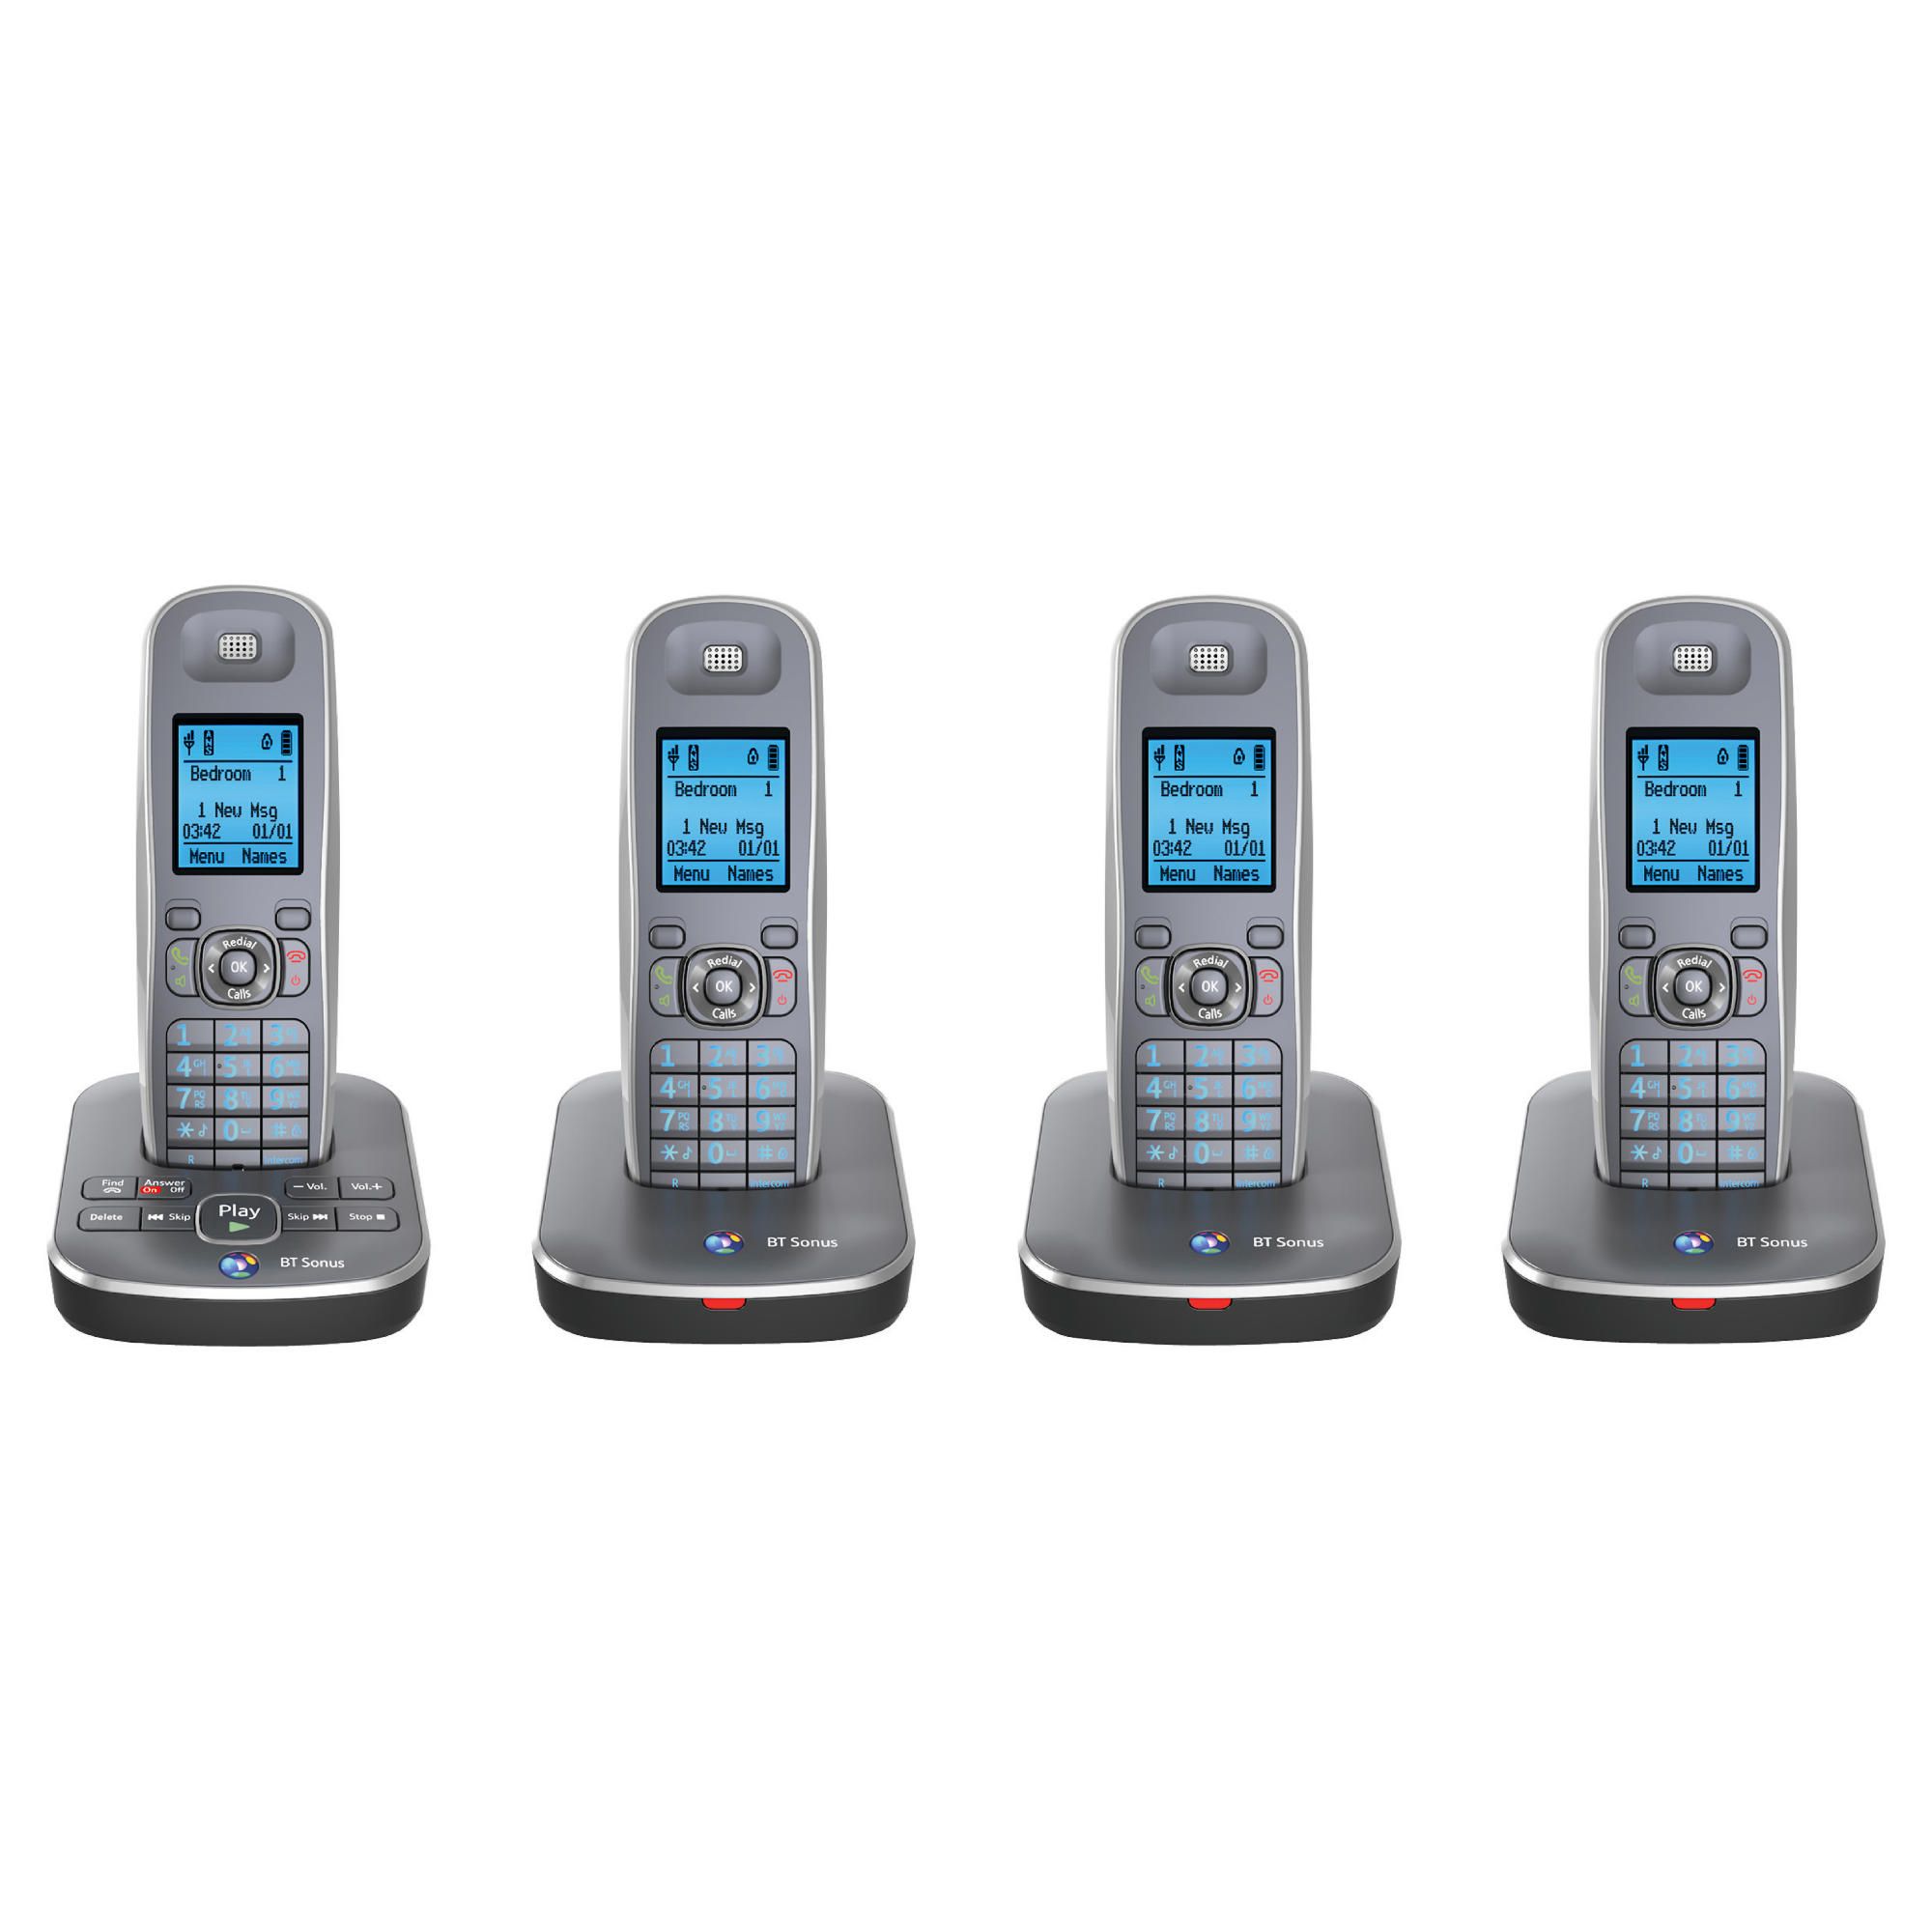 BT Sonus 1500 cordless Telephone – Set of 4